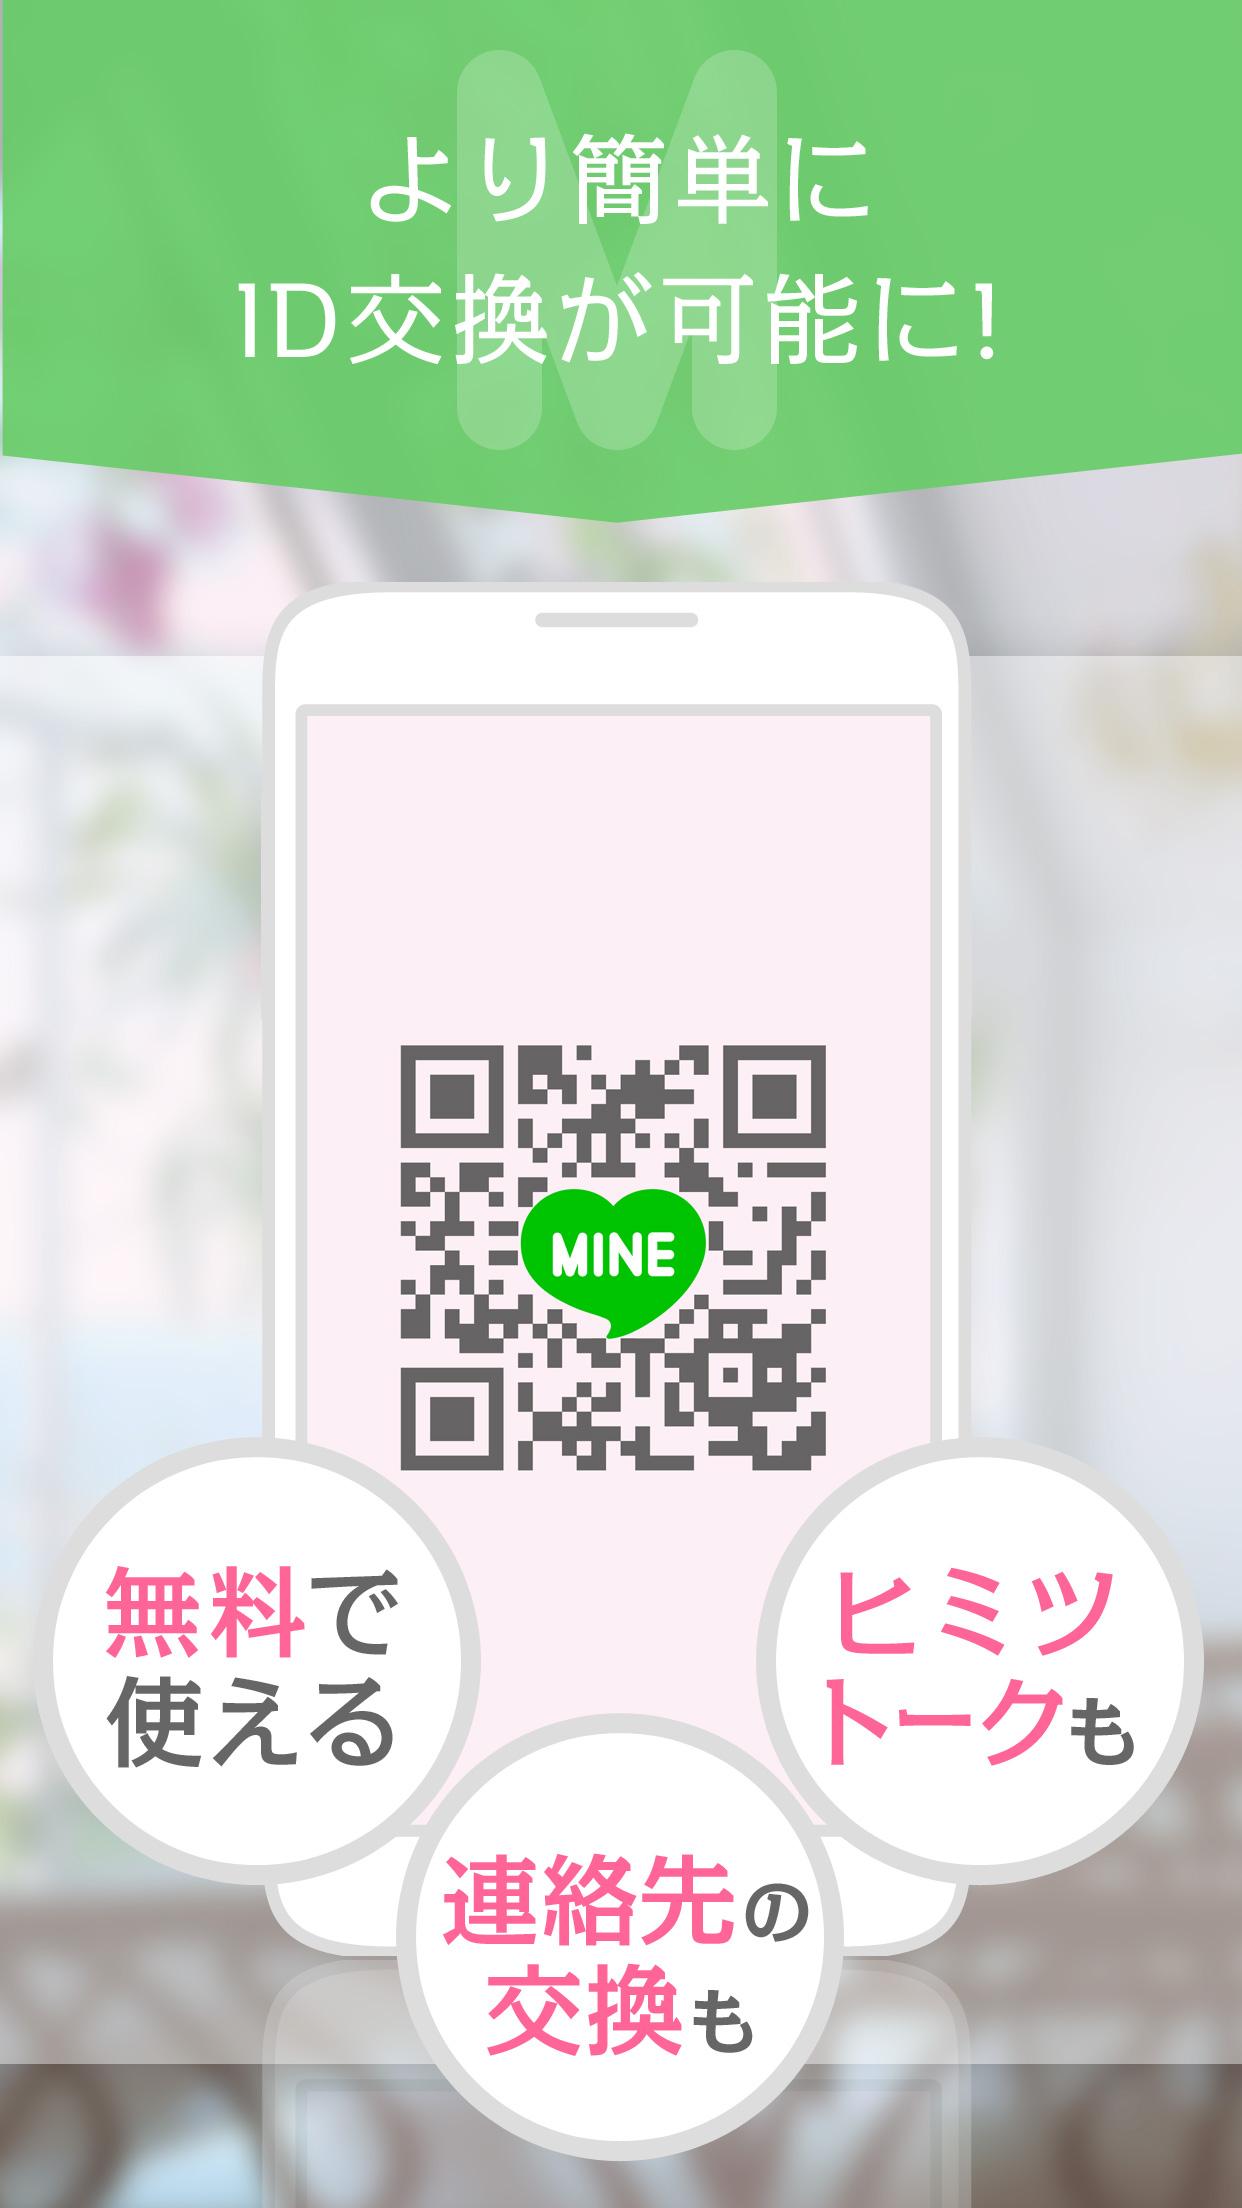 Android application 出会いは登録完全無料のMINE☆ご近所チャット型出会系アプリ screenshort